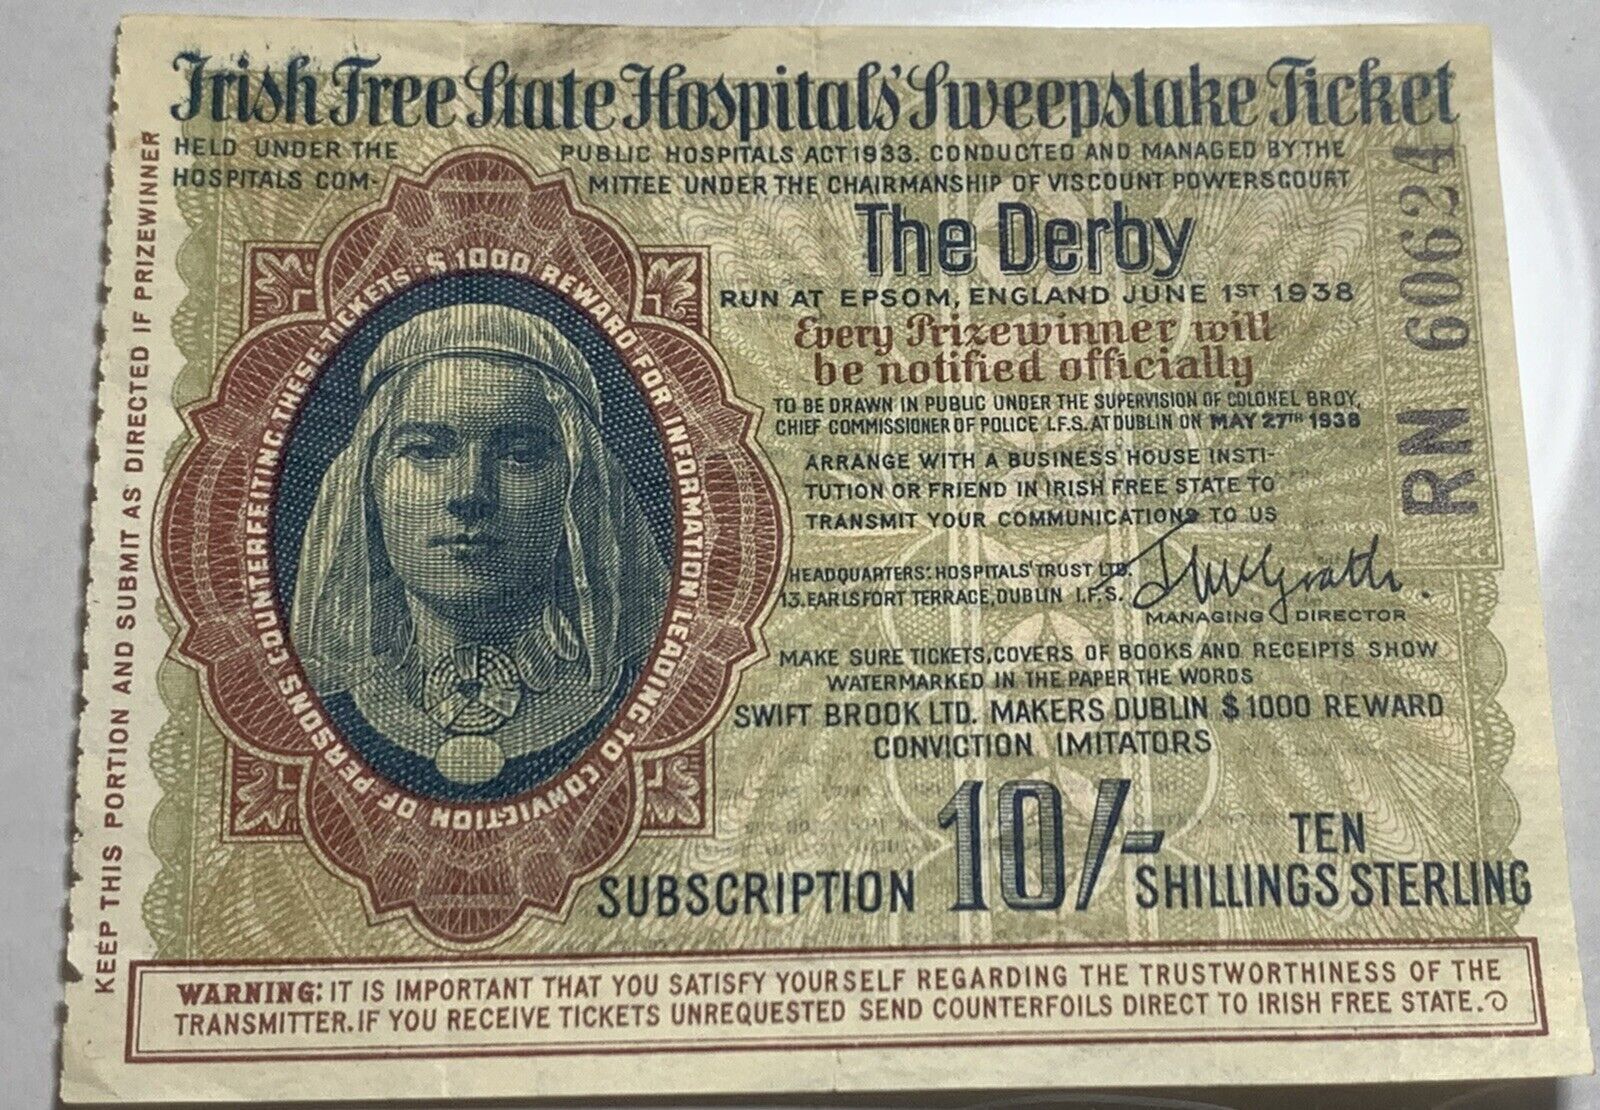 Irish Free State Hospital Sweepstake Ticket  - May 27, 1938